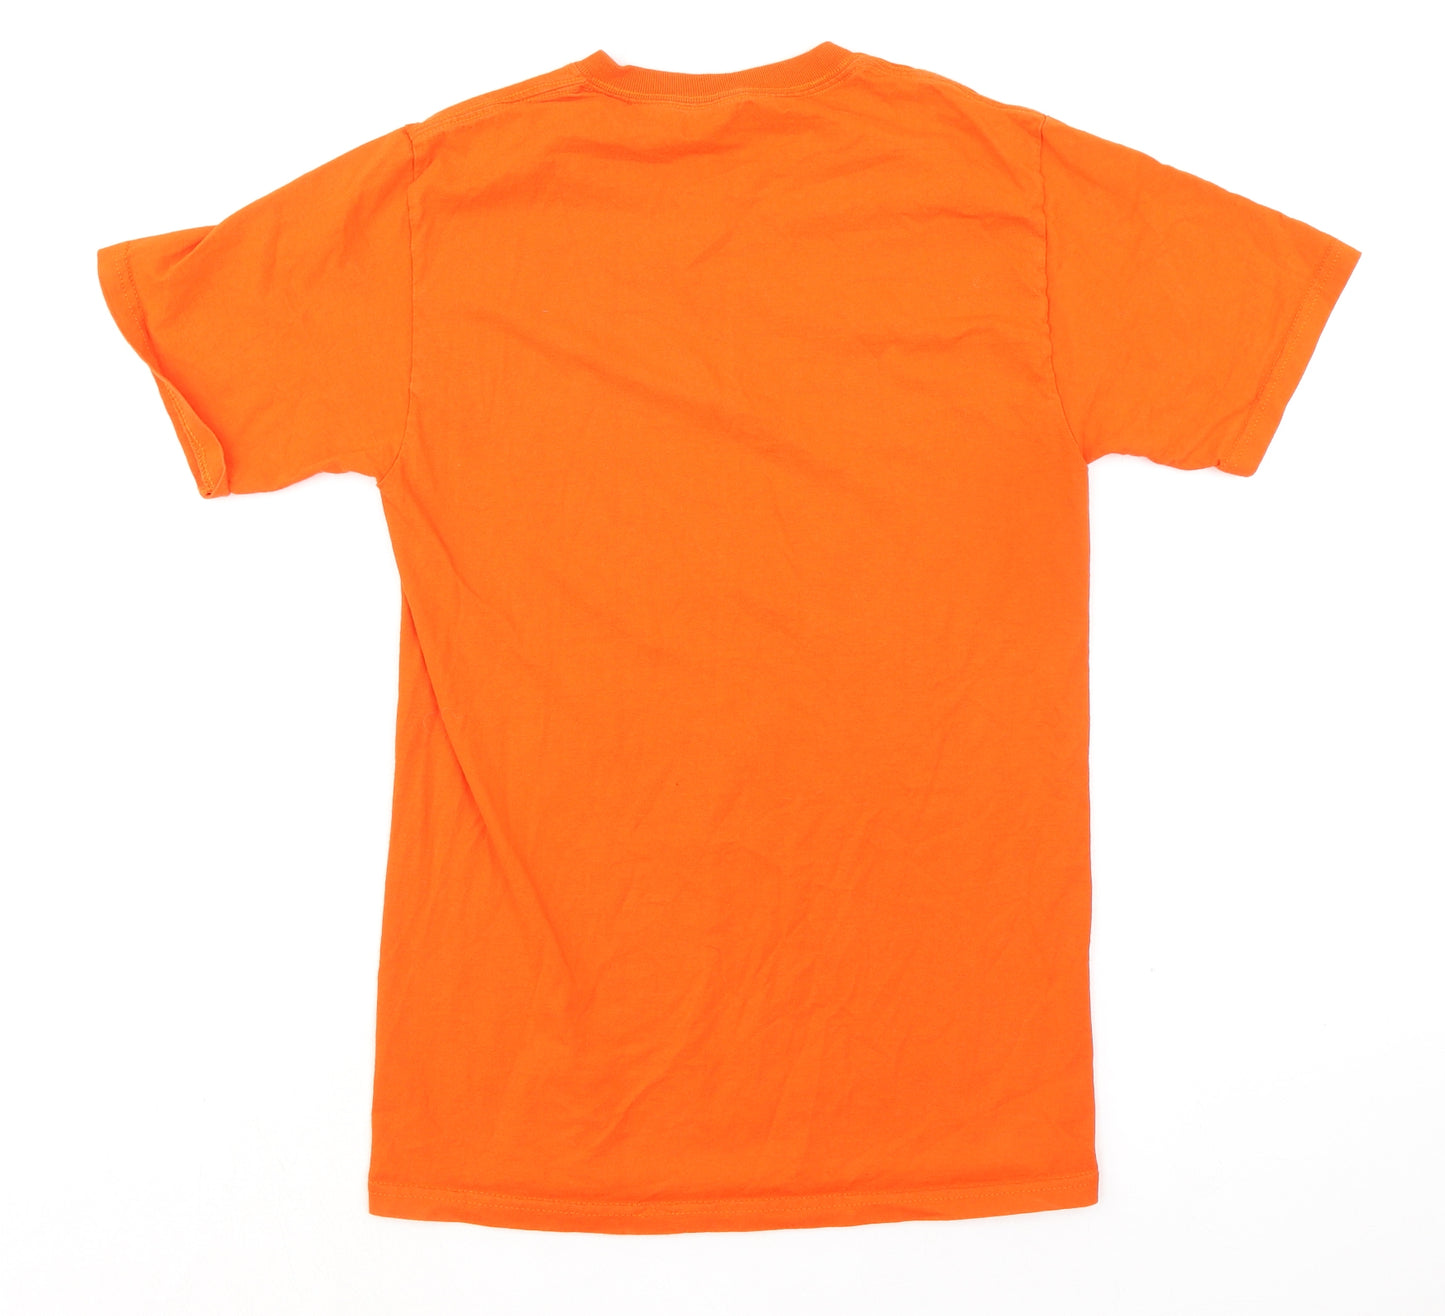 Fruit of the Loom Mens Orange Cotton T-Shirt Size S Crew Neck - Canada